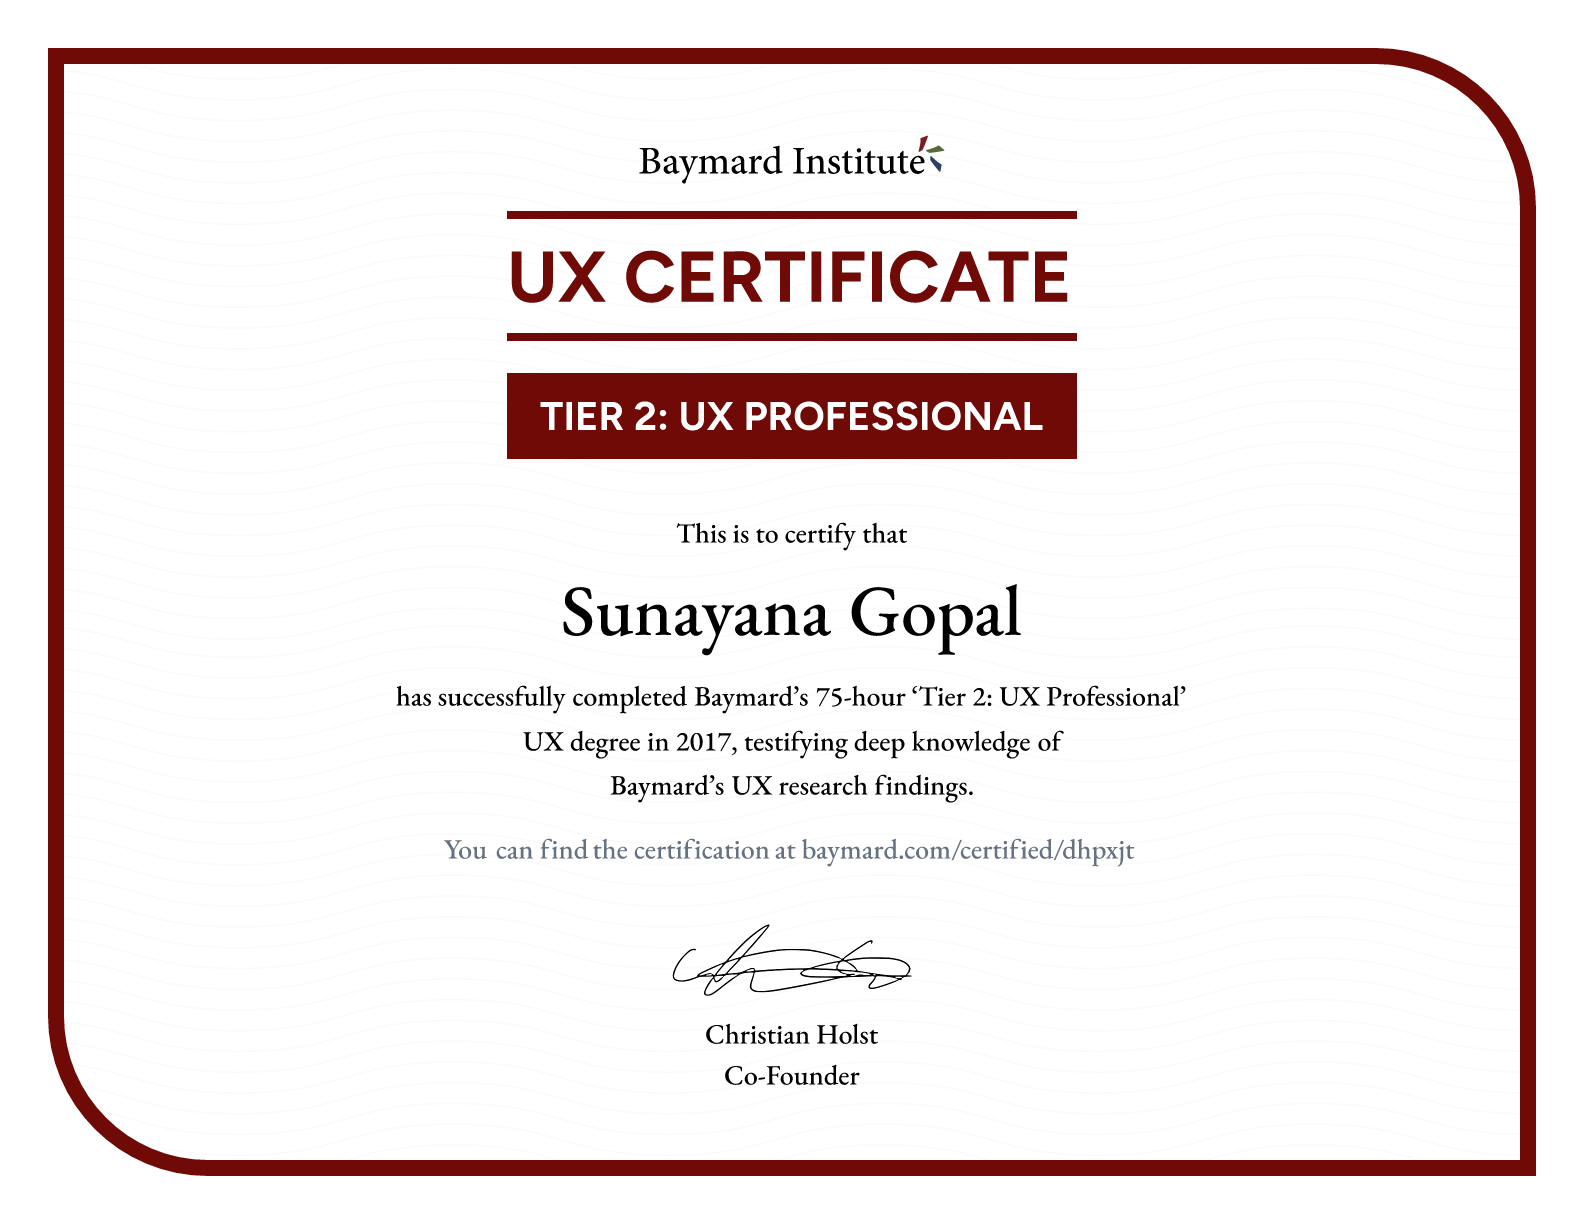 Sunayana Gopal’s certificate